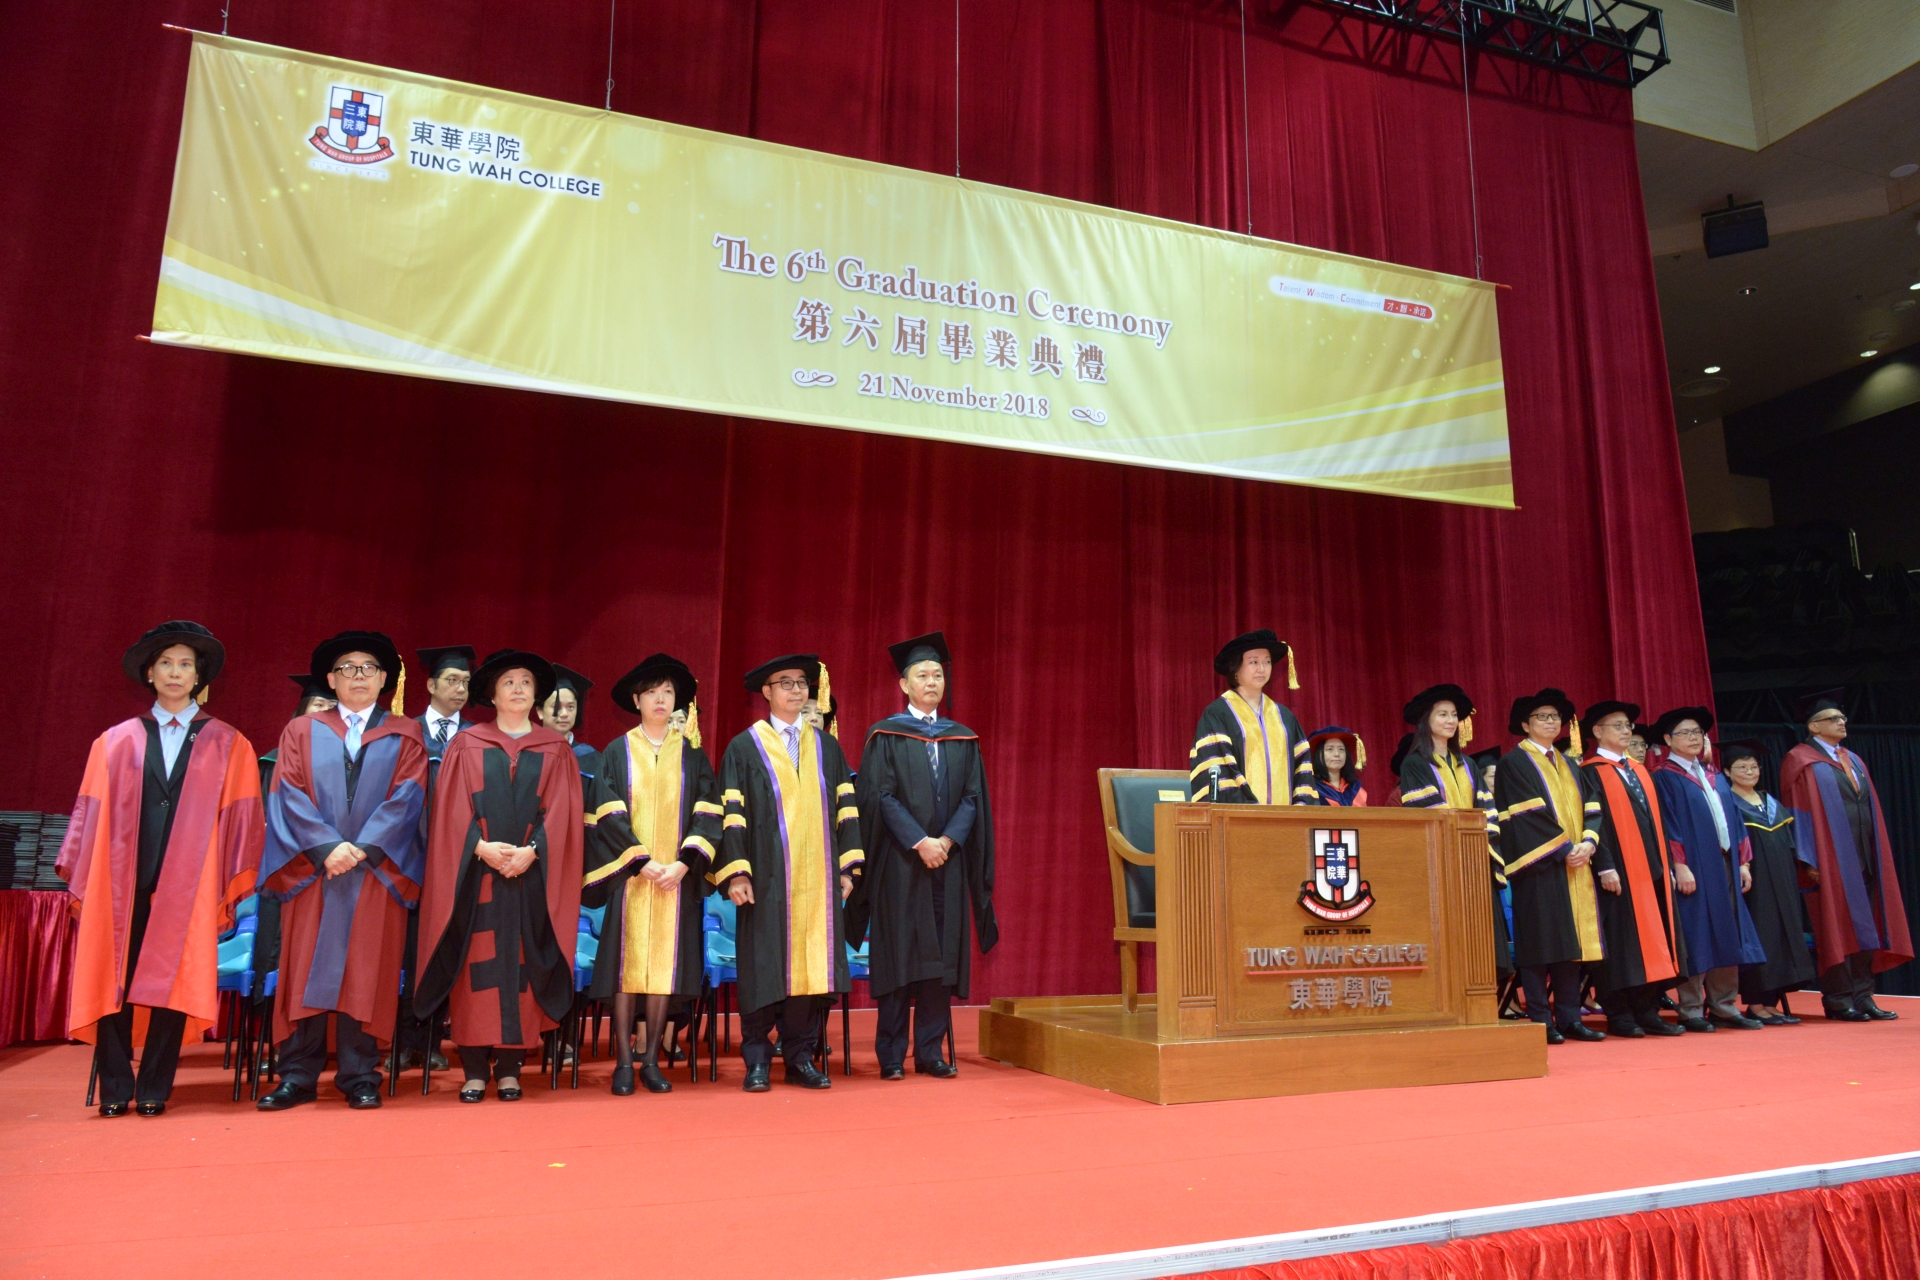 The 6th Graduation Ceremony